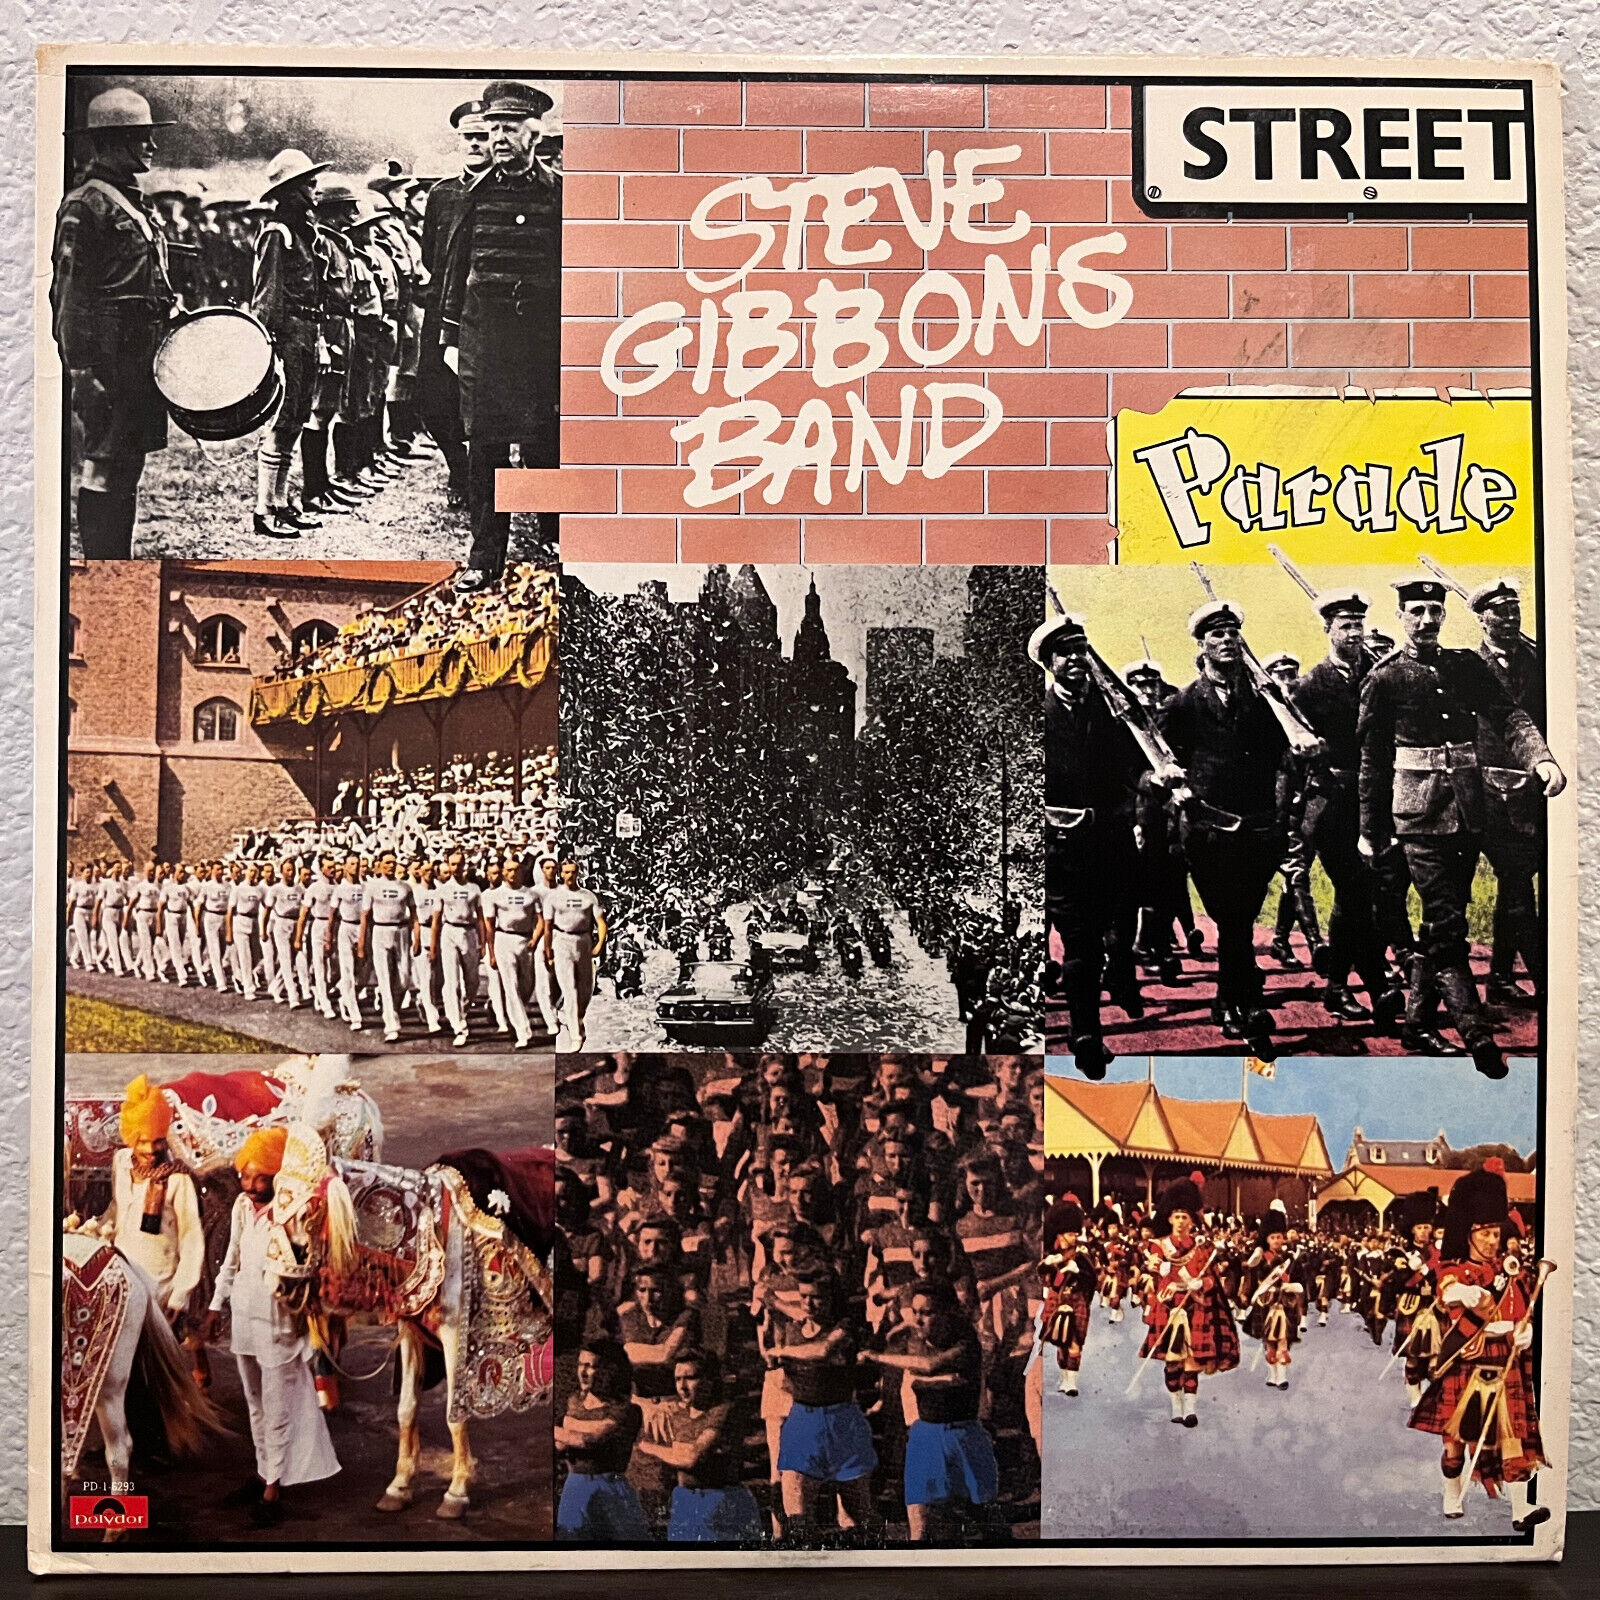 STEVE GIBBONS BAND - Parade (Polydor Promo) - 12\